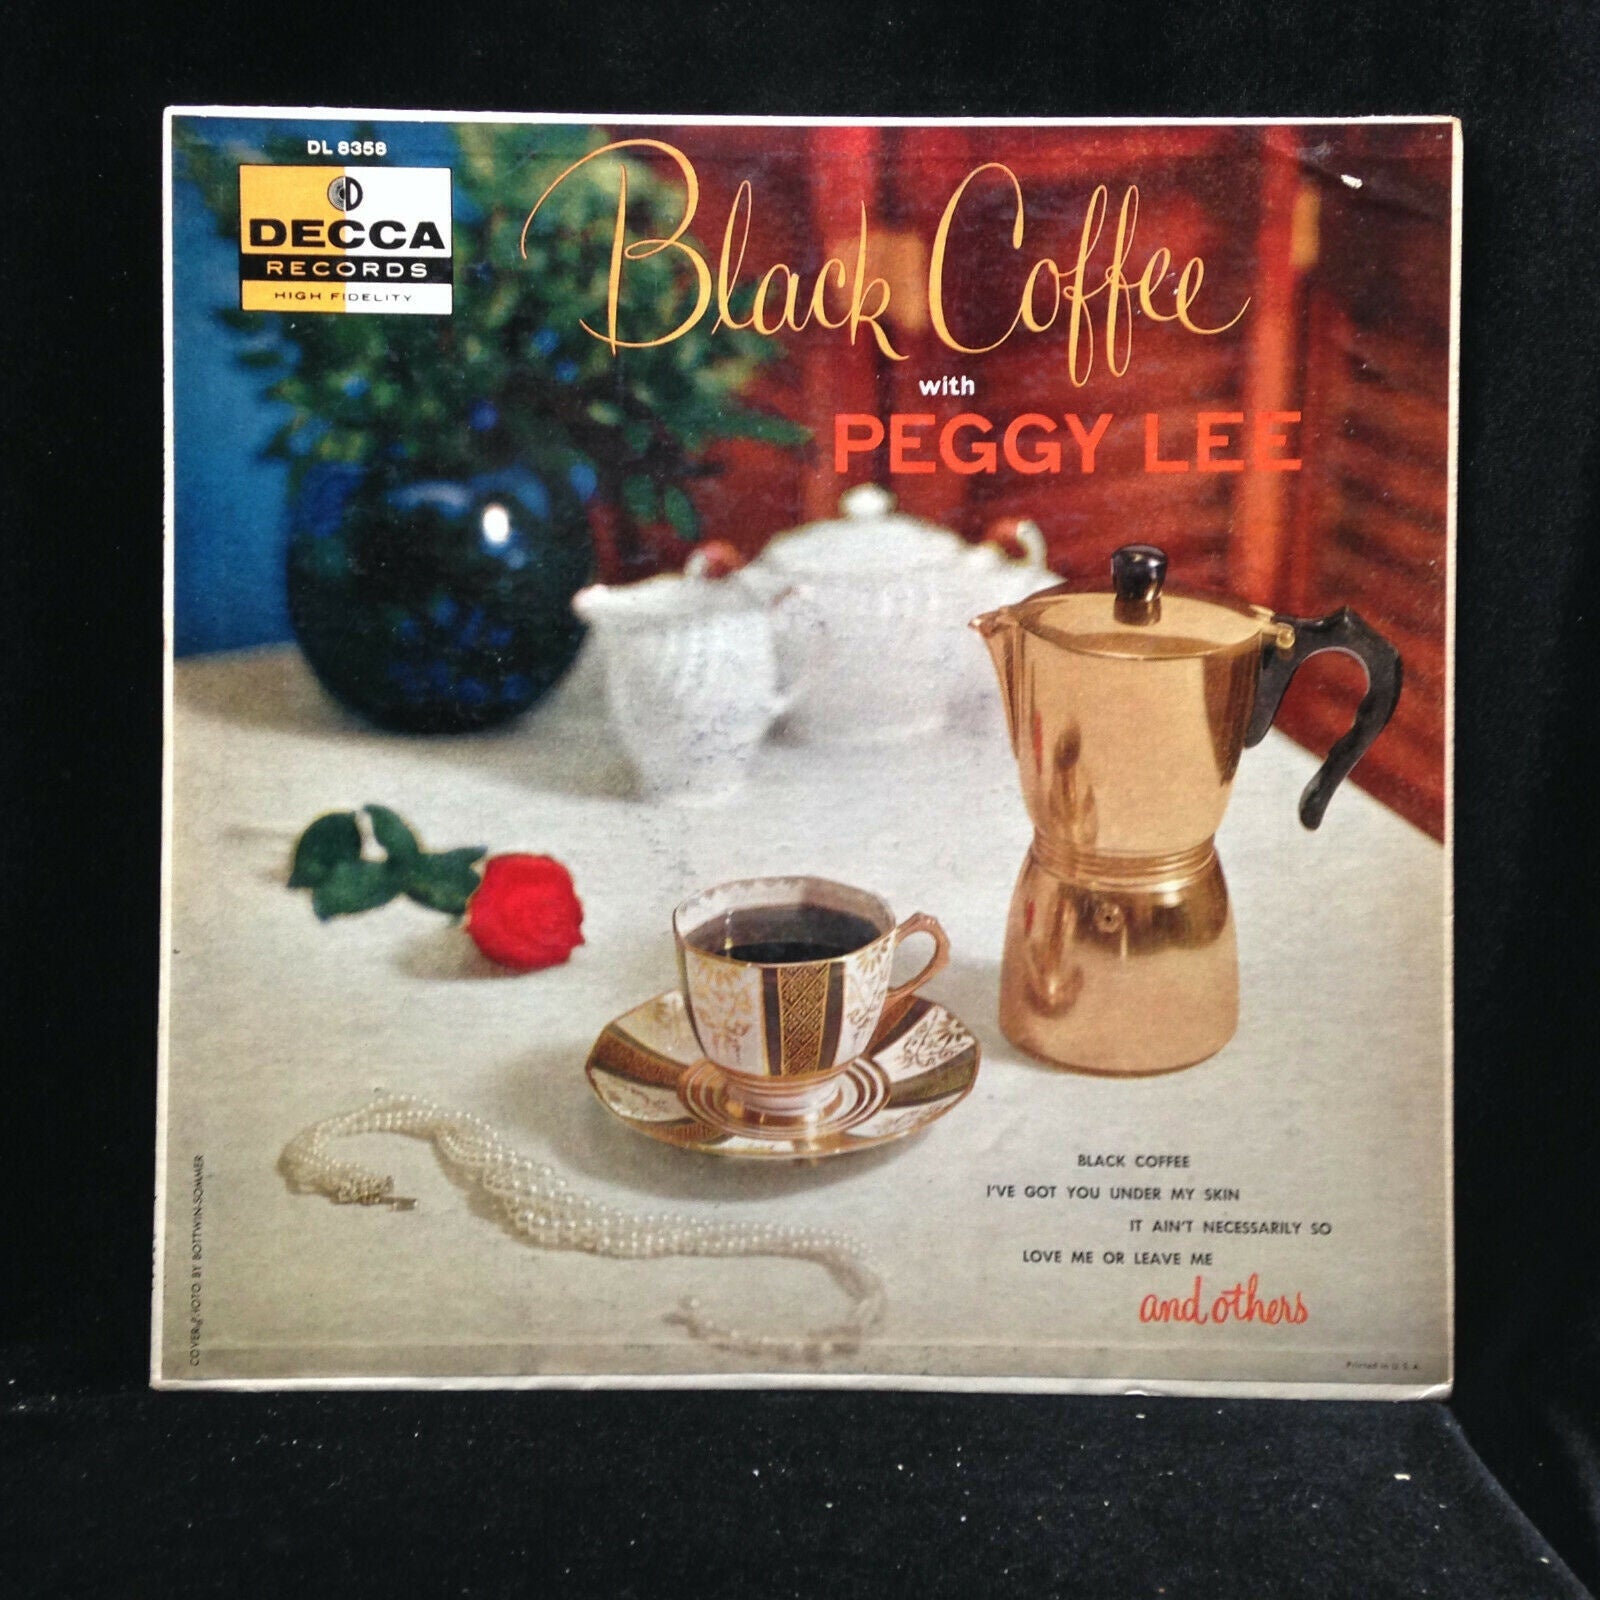 Peggy Lee – Black Coffee With Peggy Lee - VG LP Record 1956 Decca USA Mono Original Vinyl - Jazz / Easy Listening / Vocal